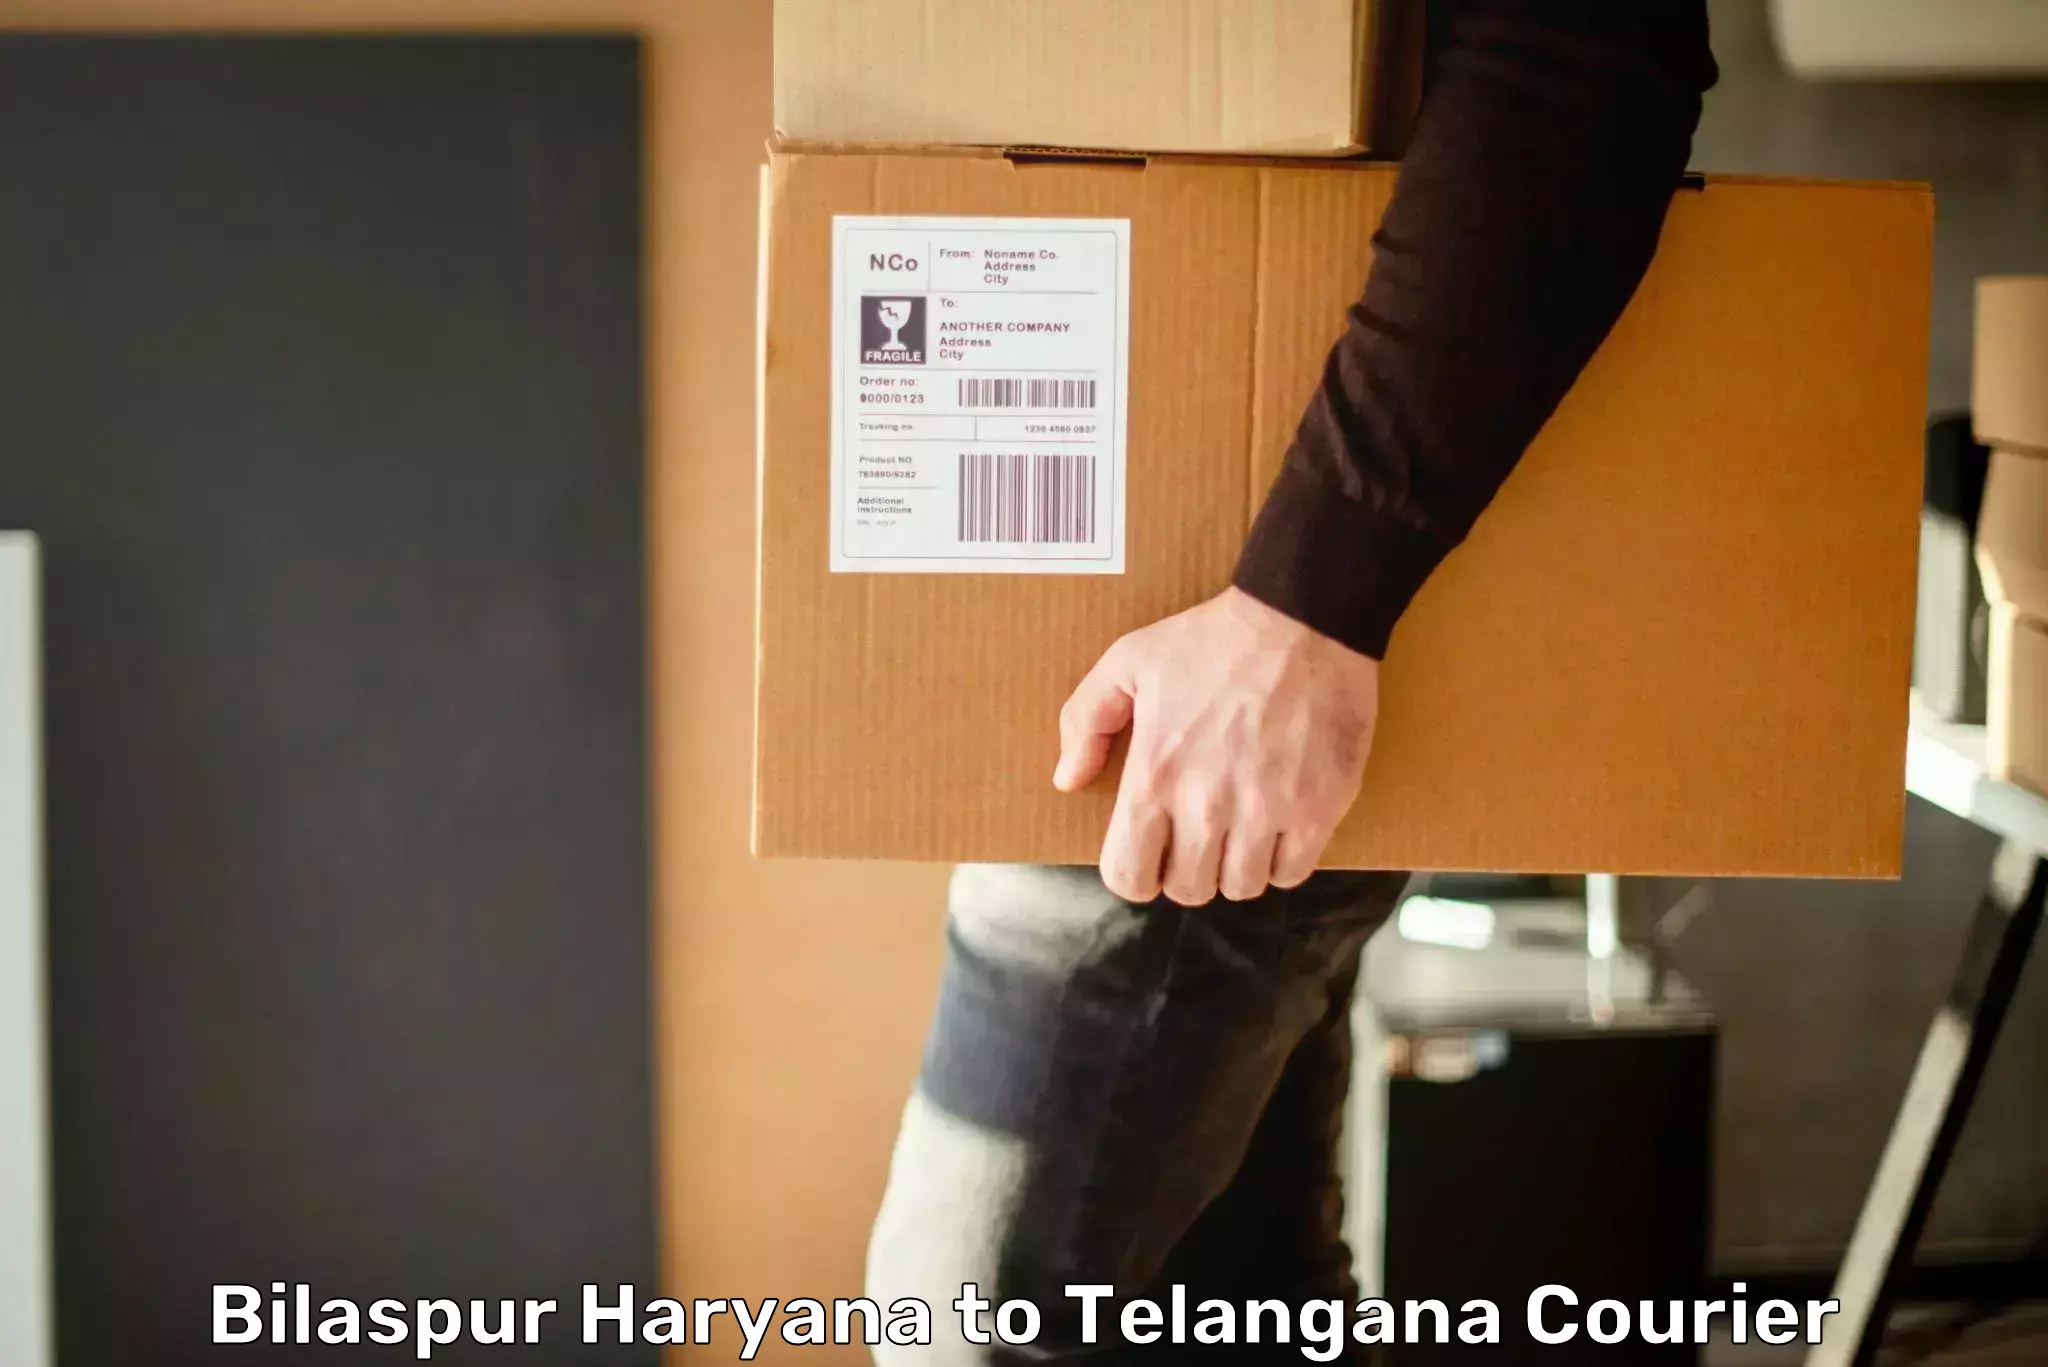 User-friendly courier app Bilaspur Haryana to Telangana